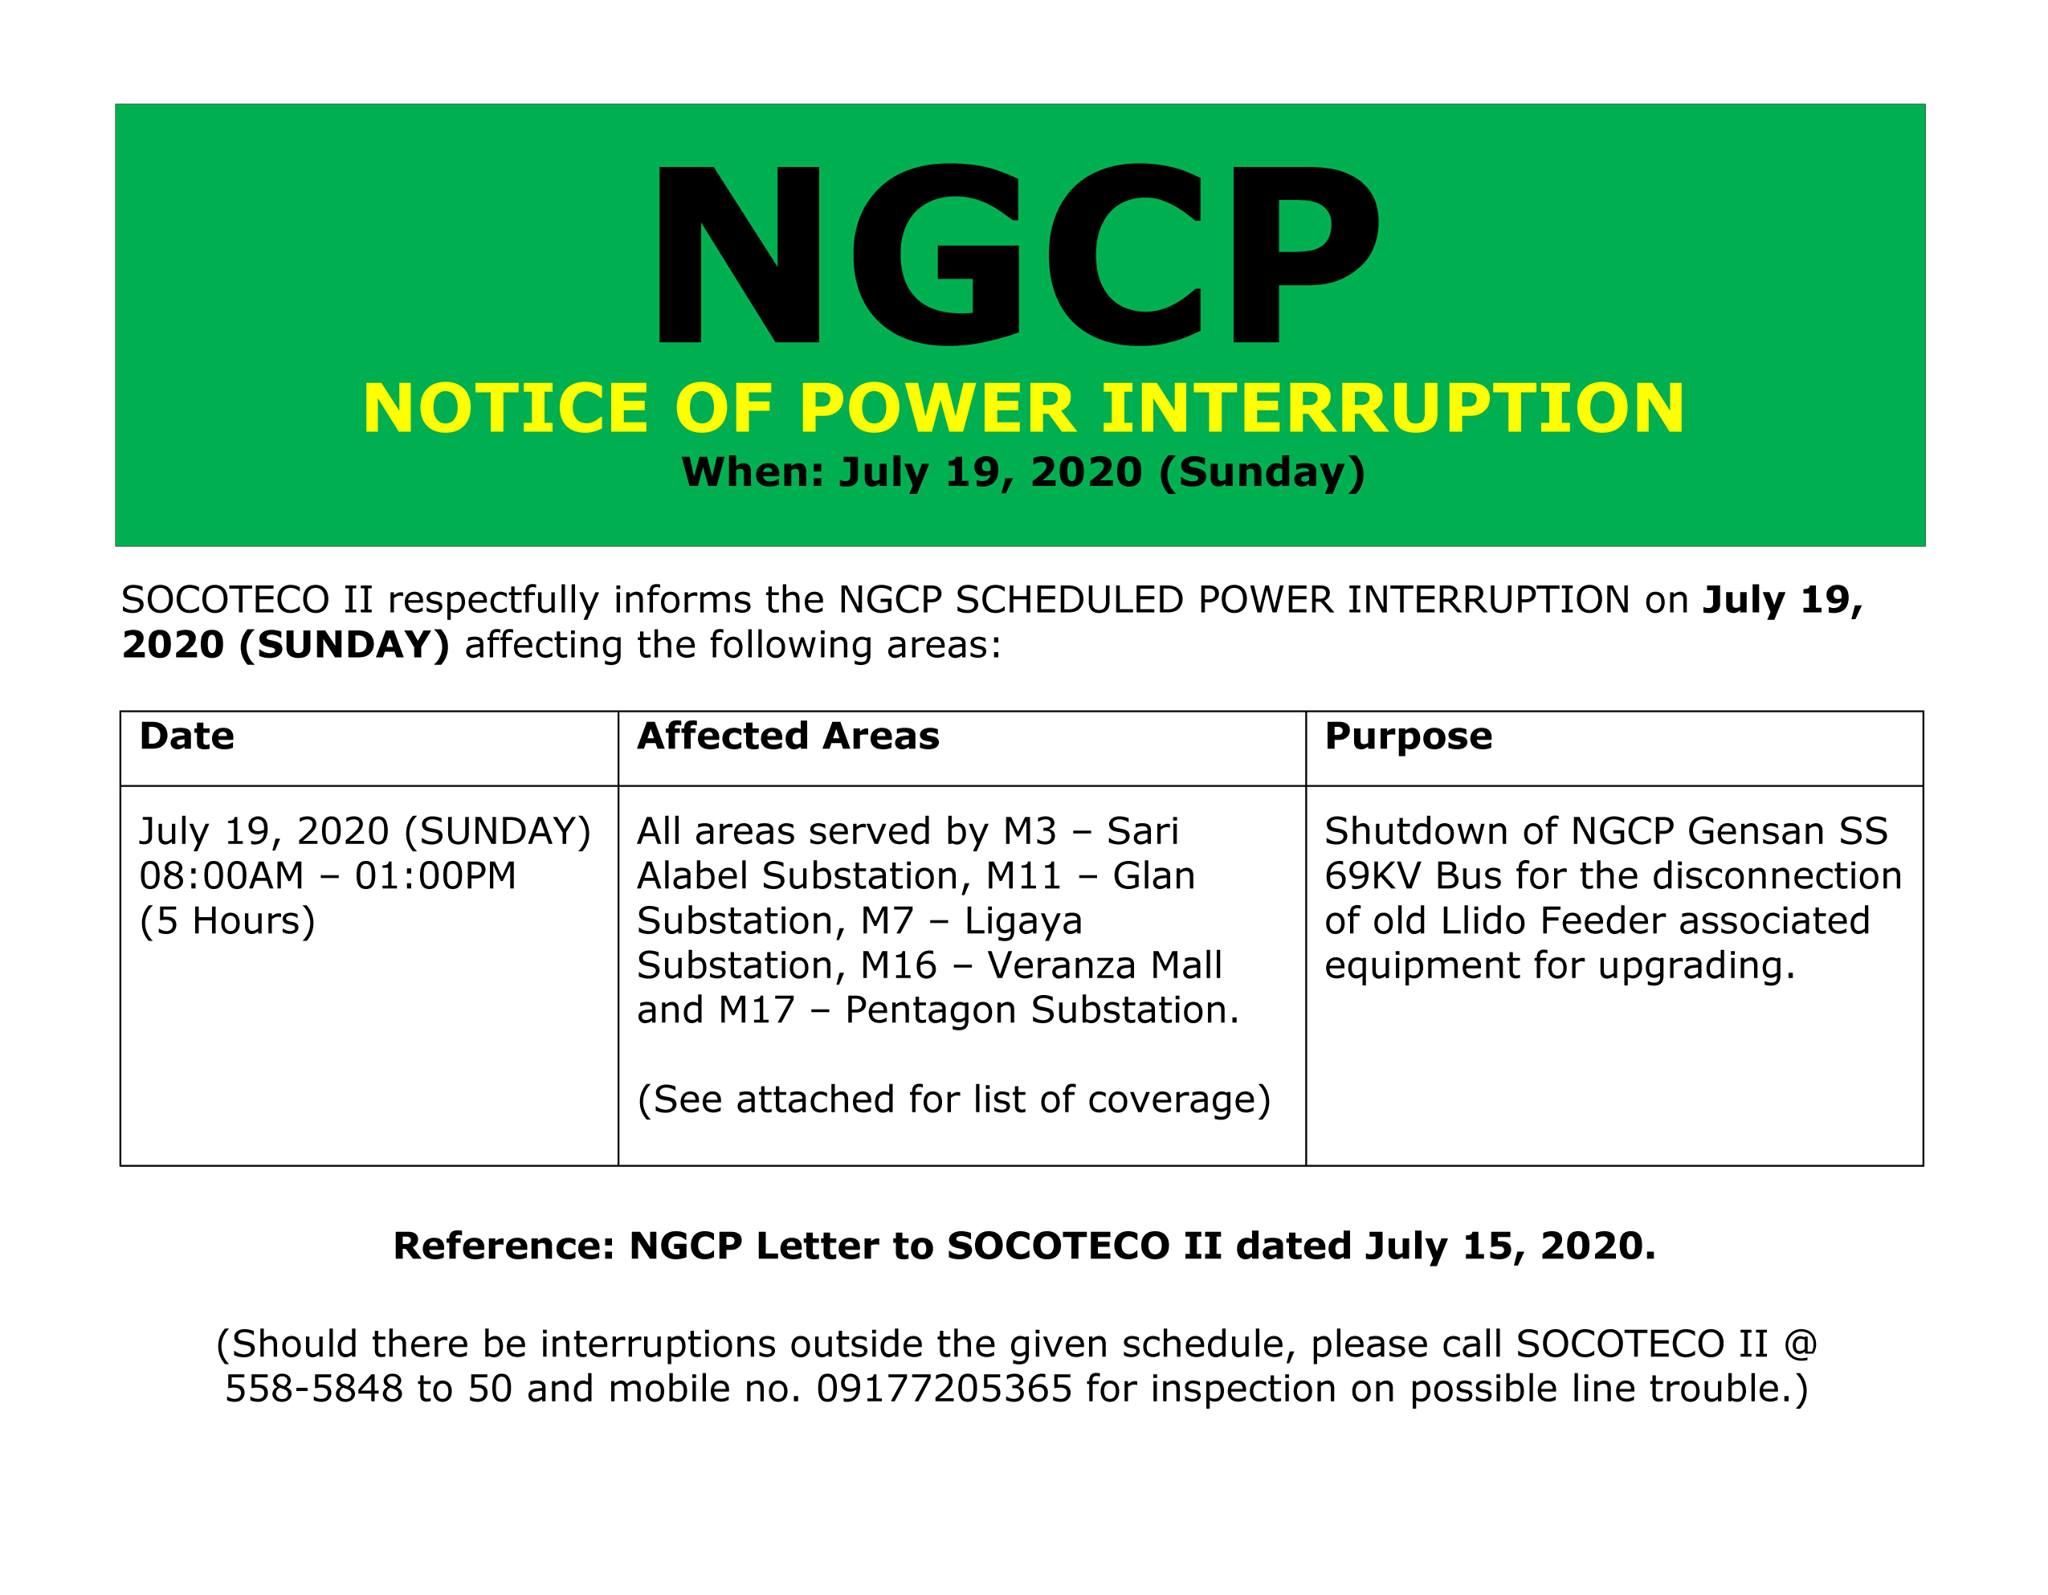 NOTICE OF NGCP POWER INTERRUPTION July 19, 2020 (Sunday)